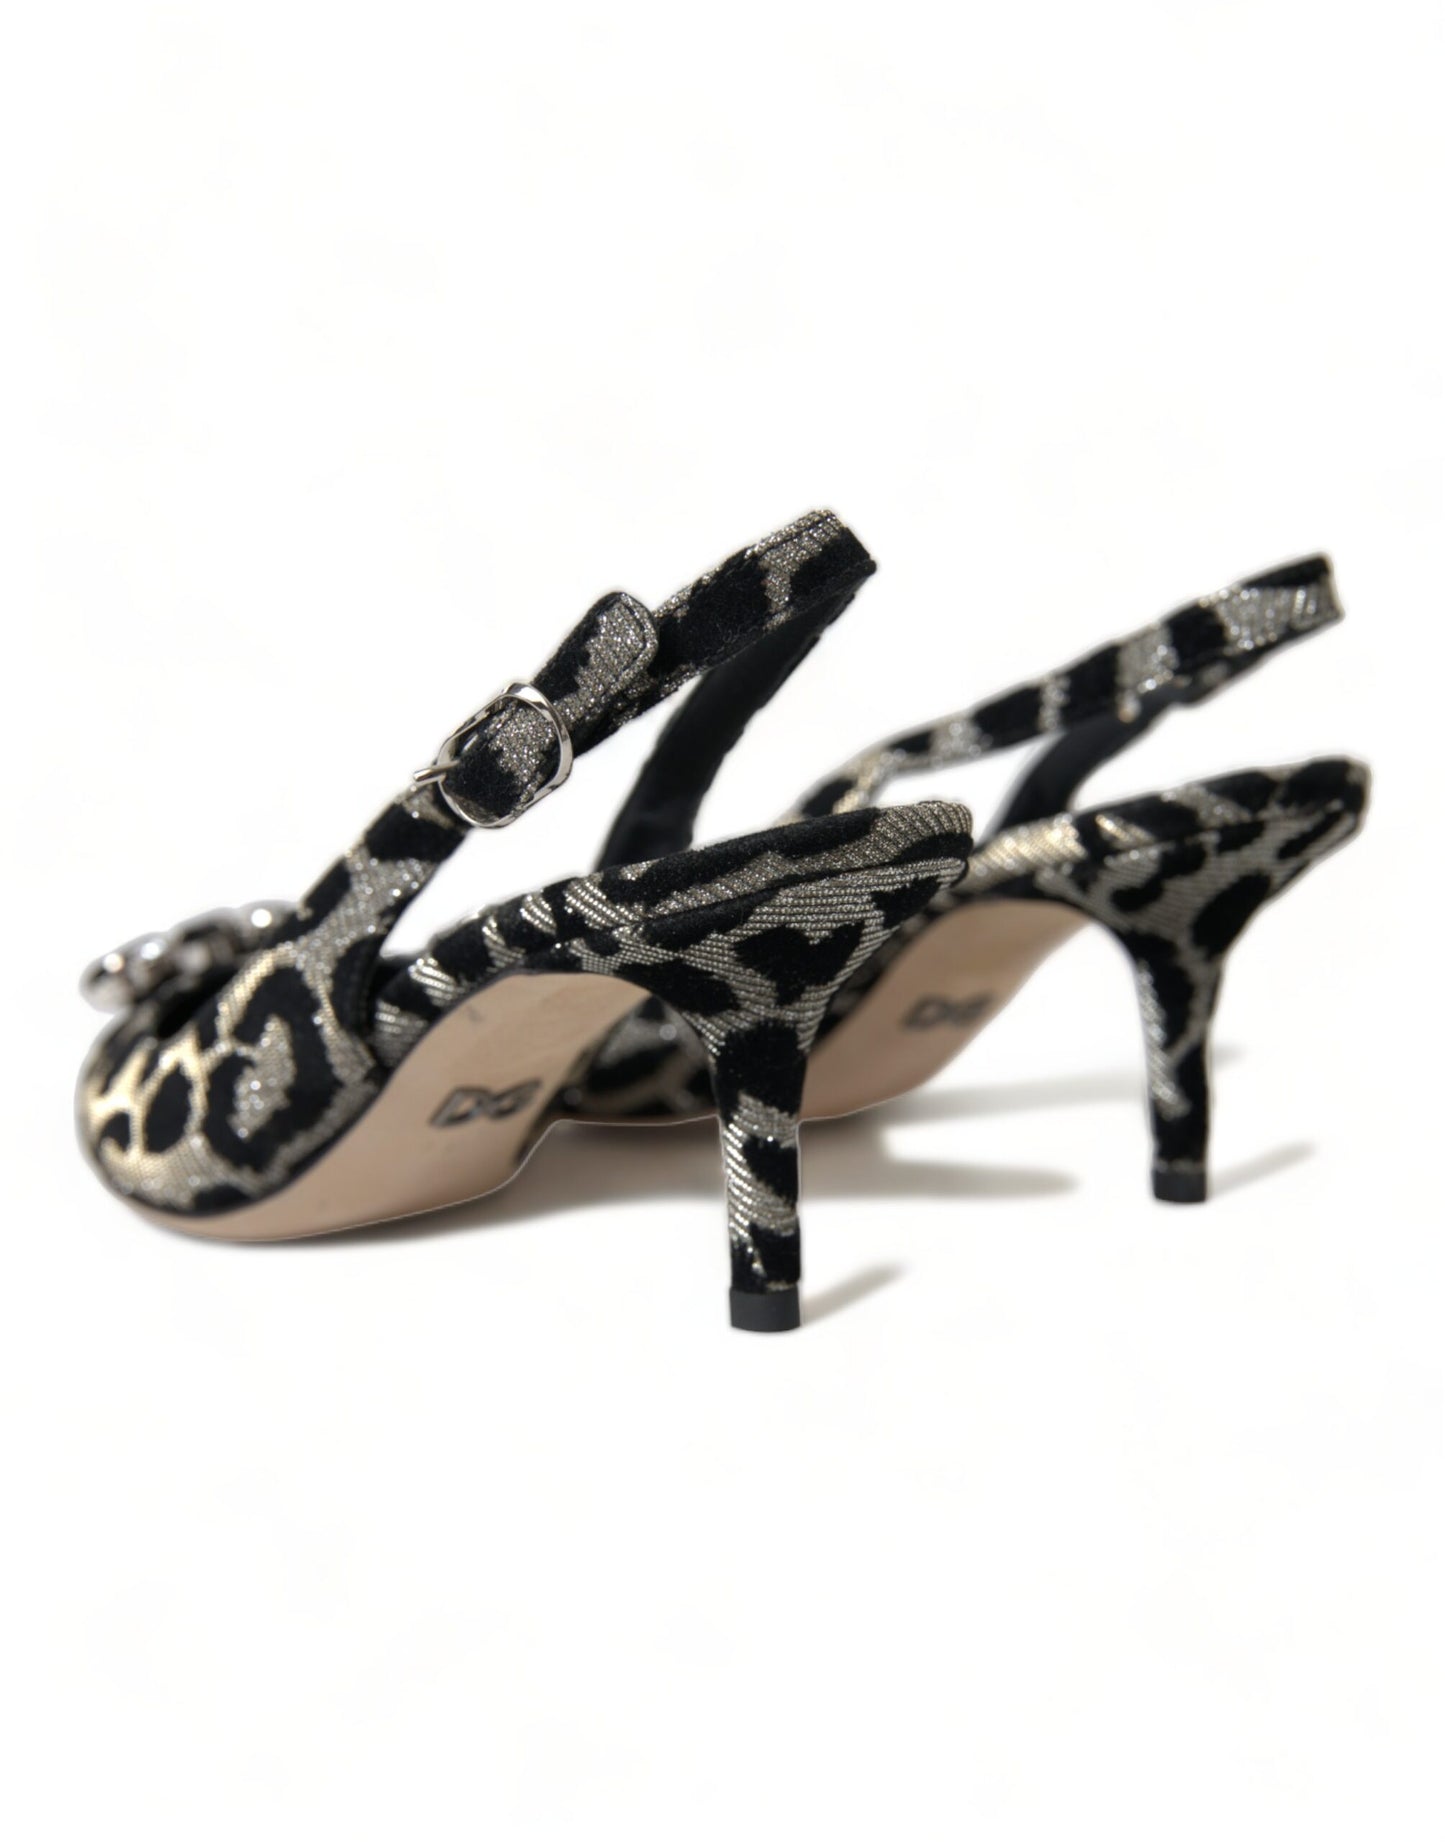 Dolce & Gabbana Silver Leopard Crystal Slingback Pumps Shoes